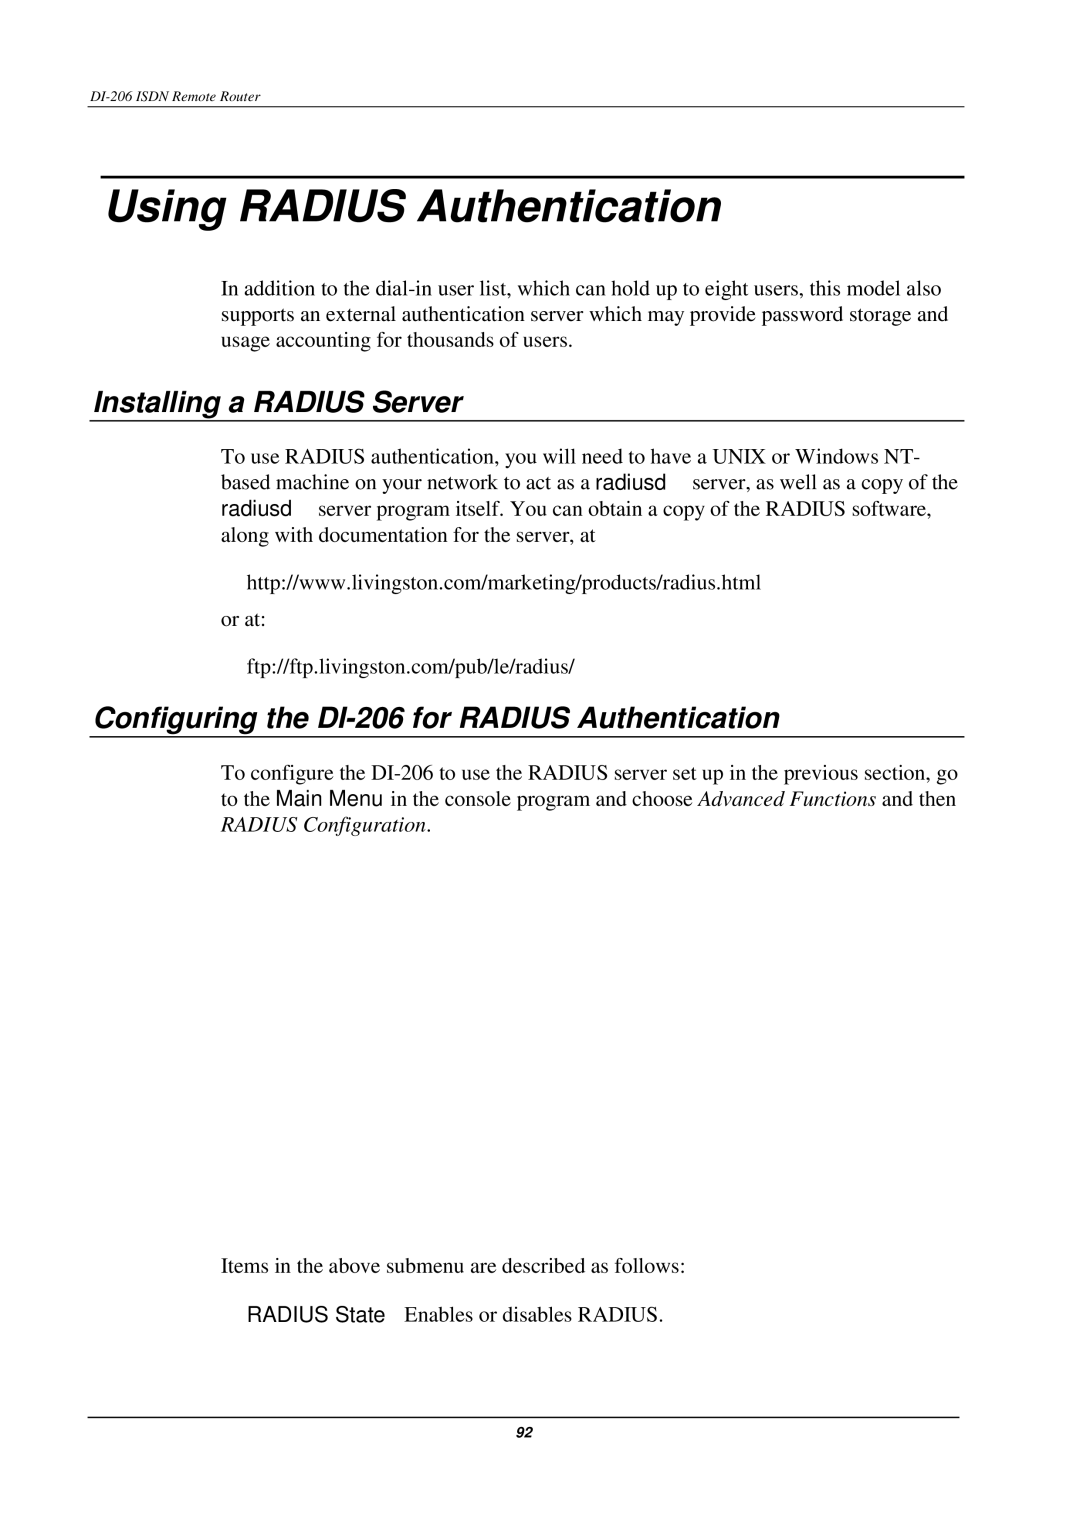 D-Link manual Using Radius Authentication, Installing a Radius Server, Configuring the DI-206 for Radius Authentication 